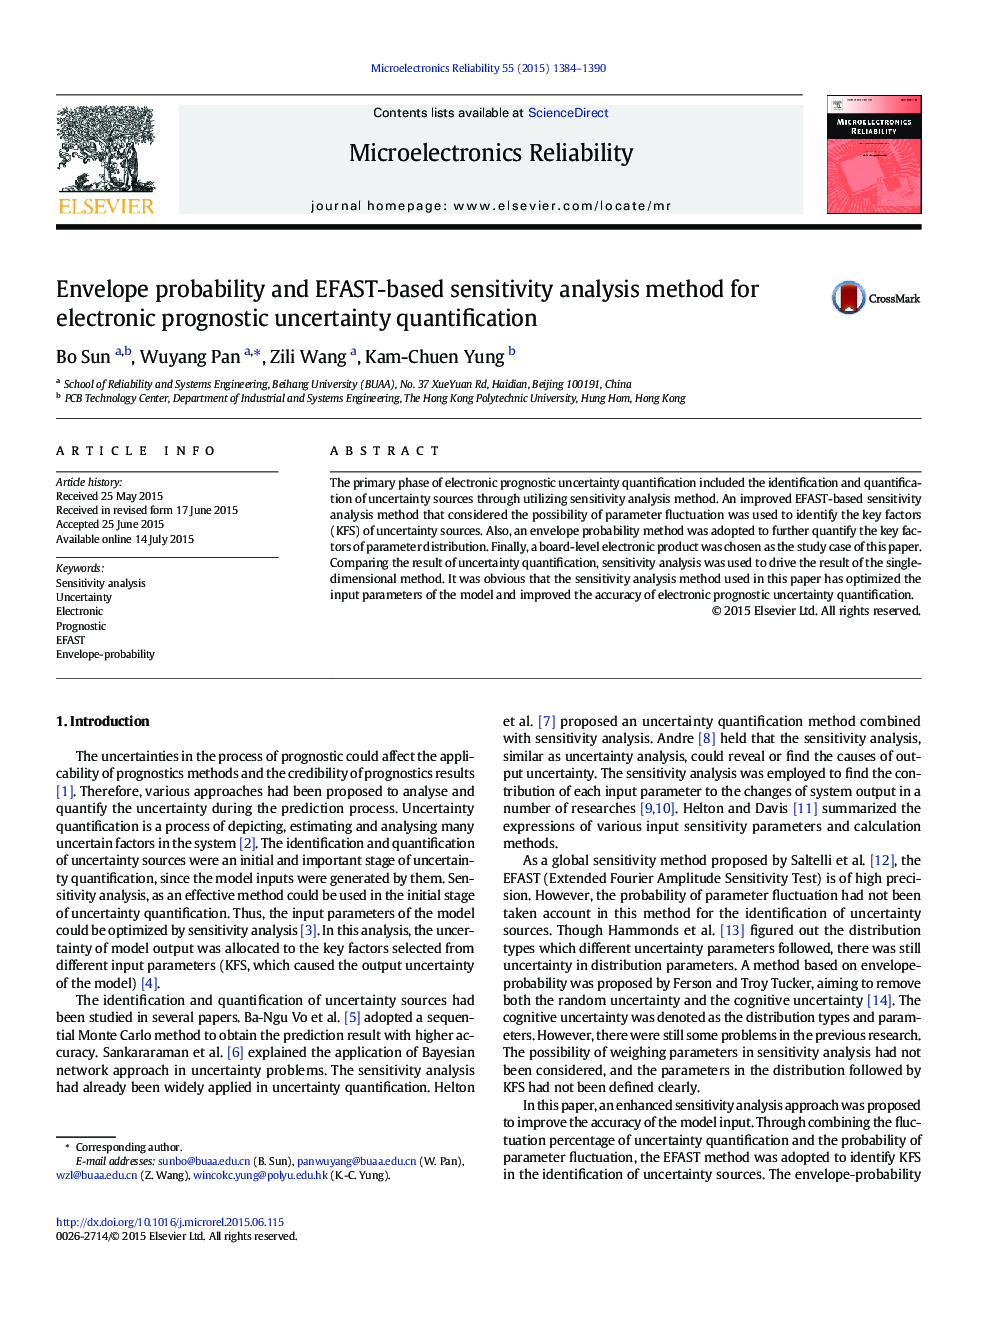 Envelope probability and EFAST-based sensitivity analysis method for electronic prognostic uncertainty quantification